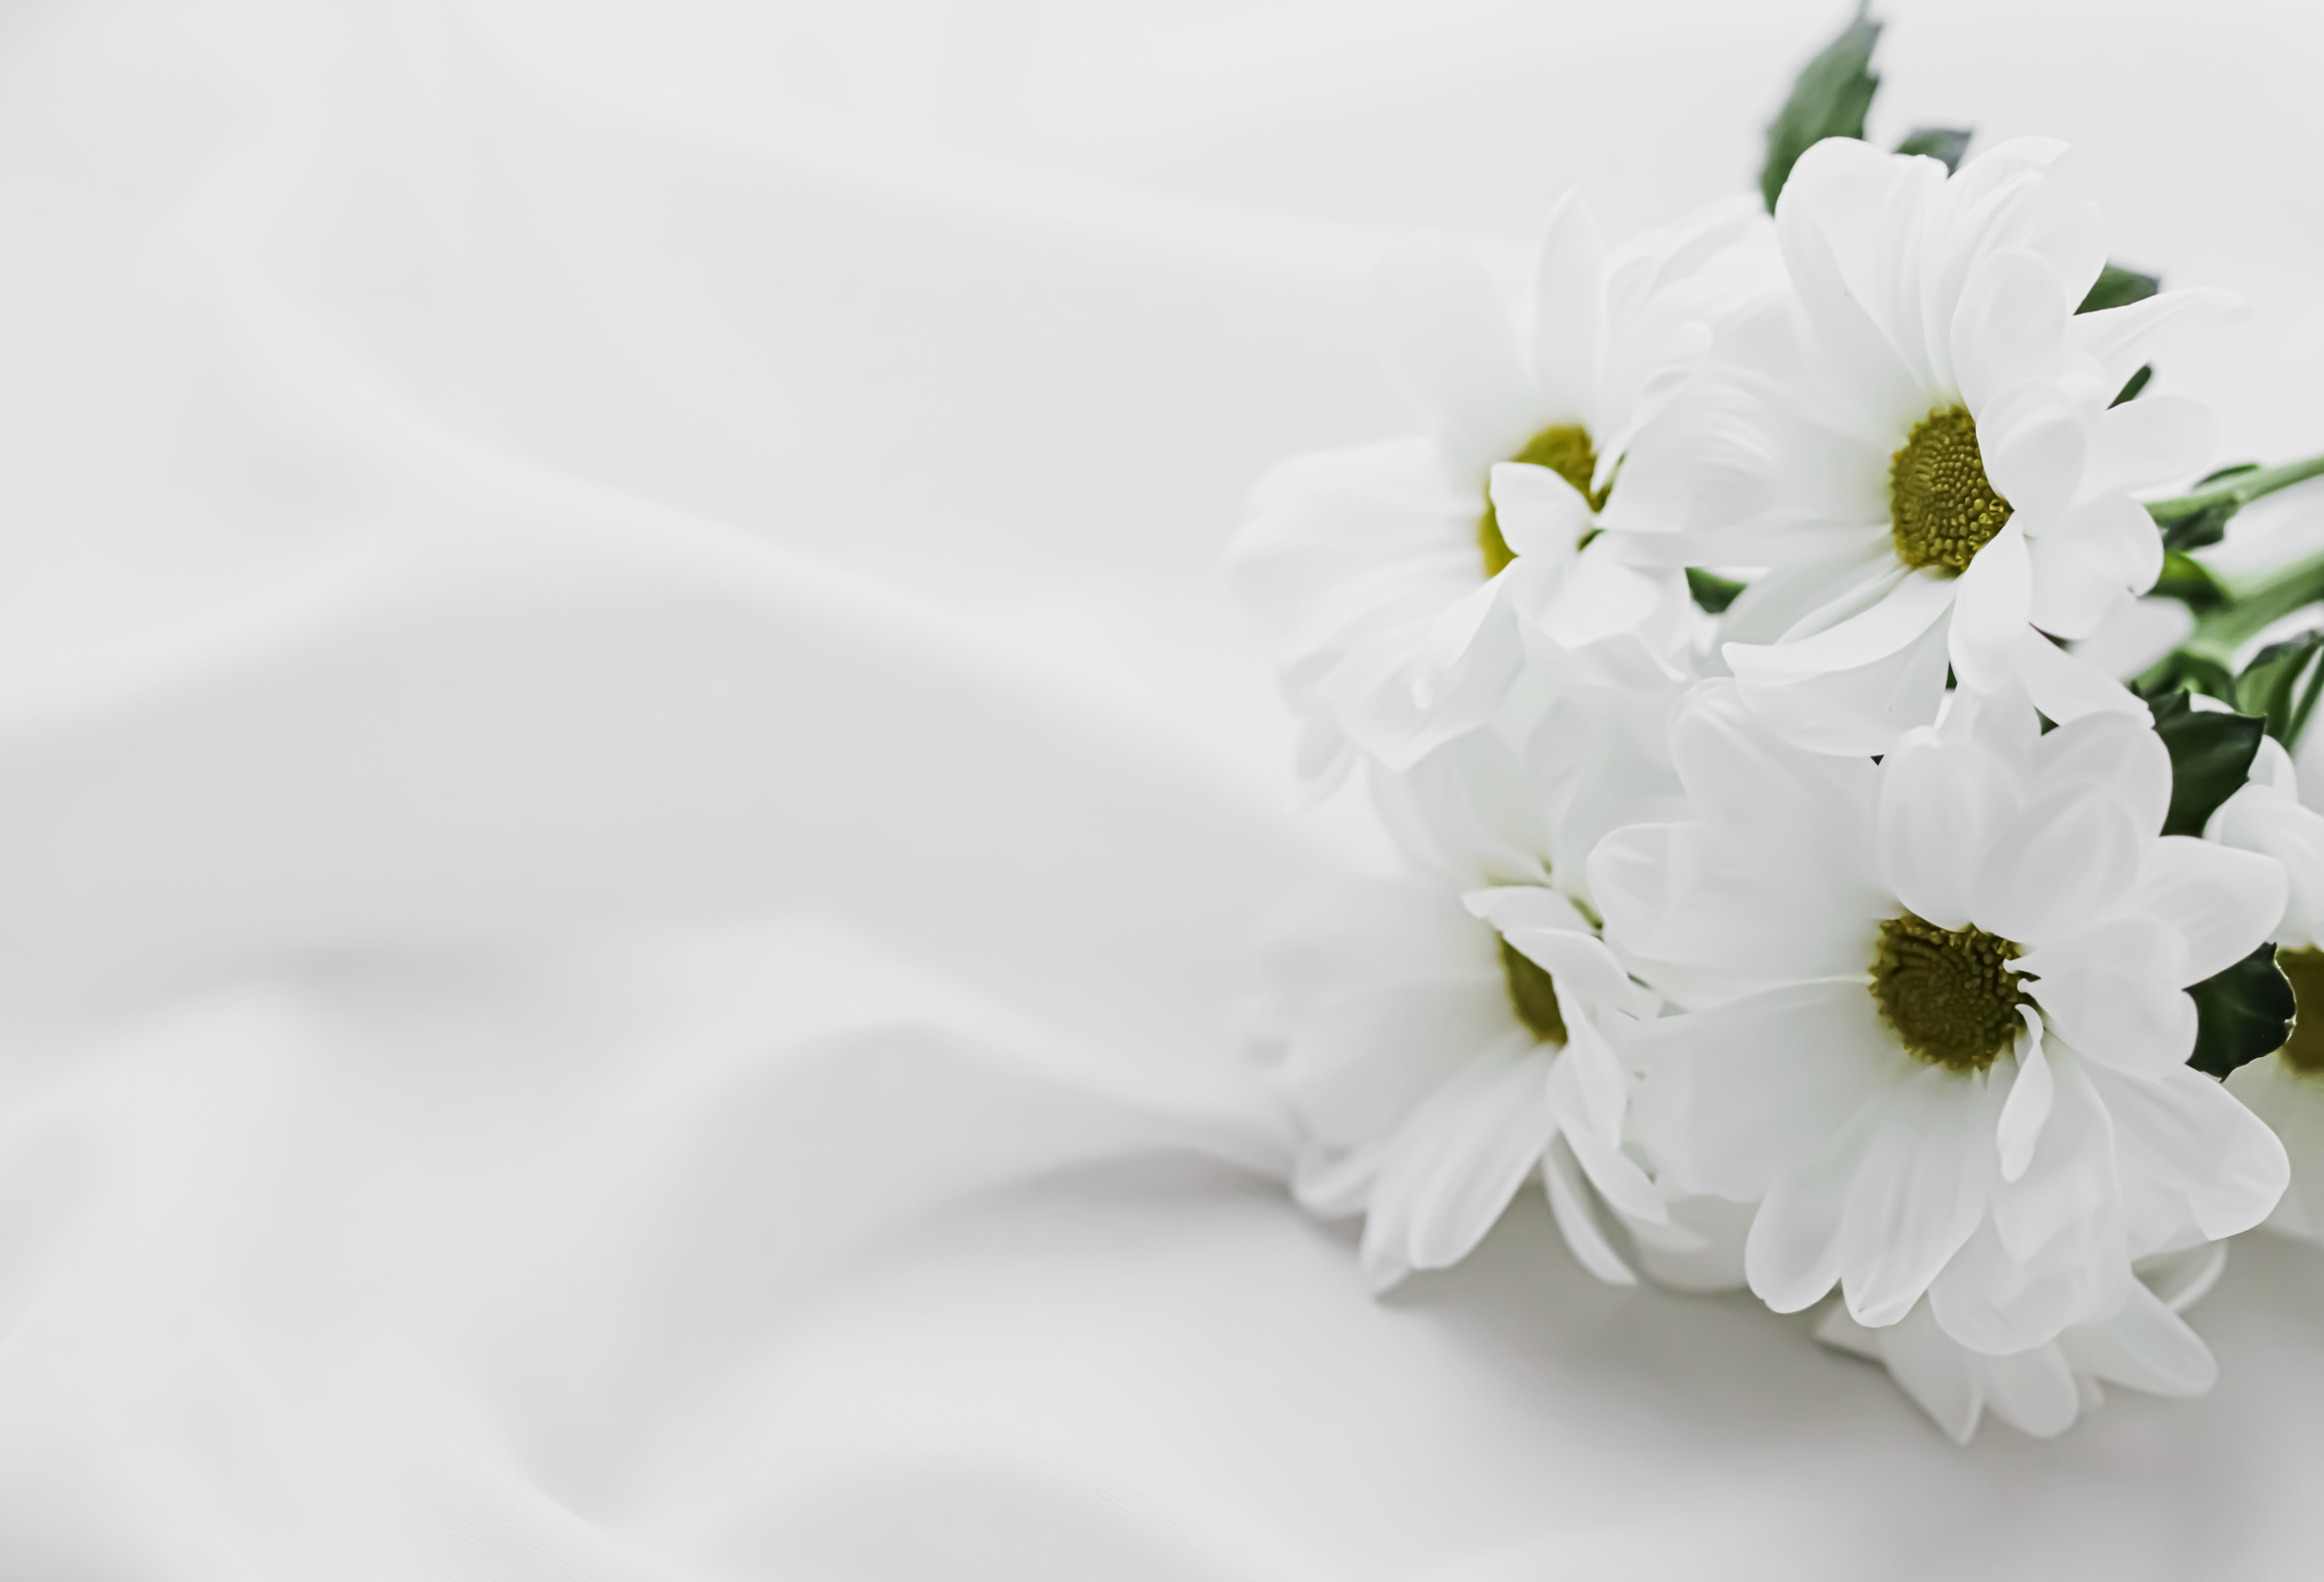 White Daisy Flowers on Silk Fabric as Bridal Flatlay Background, Wedding Invitation and Holiday Branding, Flat Lay Design